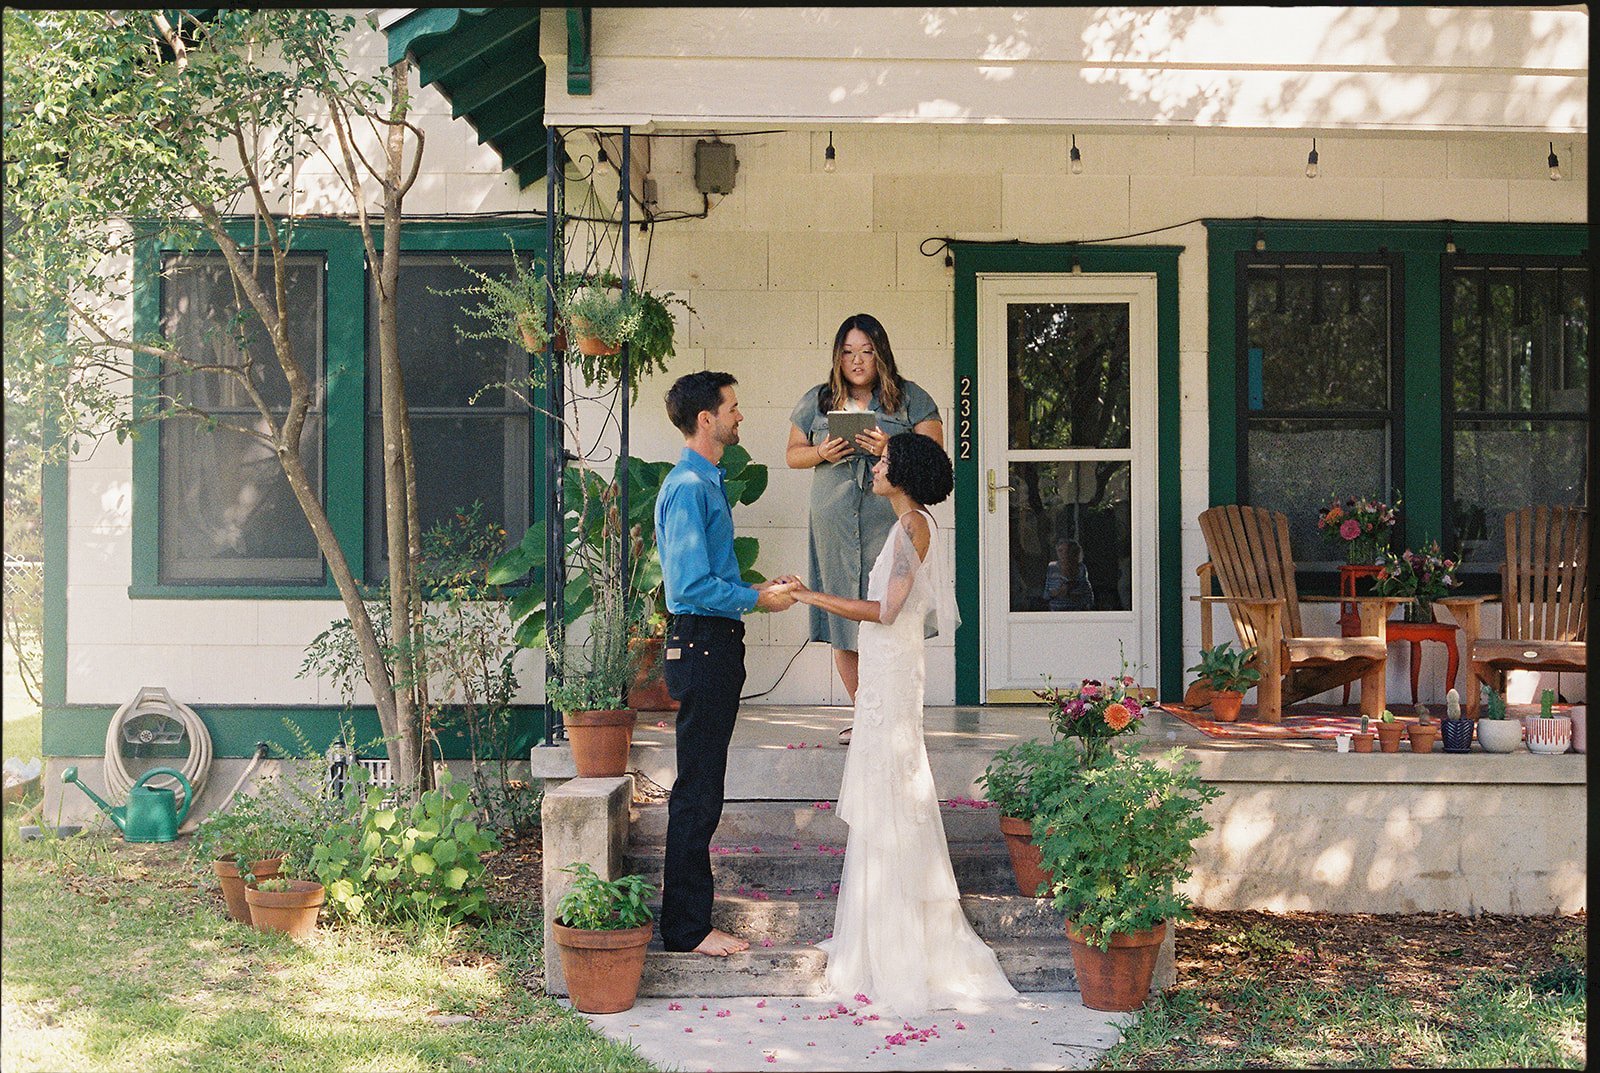 Best-Austin-Wedding-Photographers-Elopement-Film-35mm-Asheville-Santa-Barbara-8.jpg